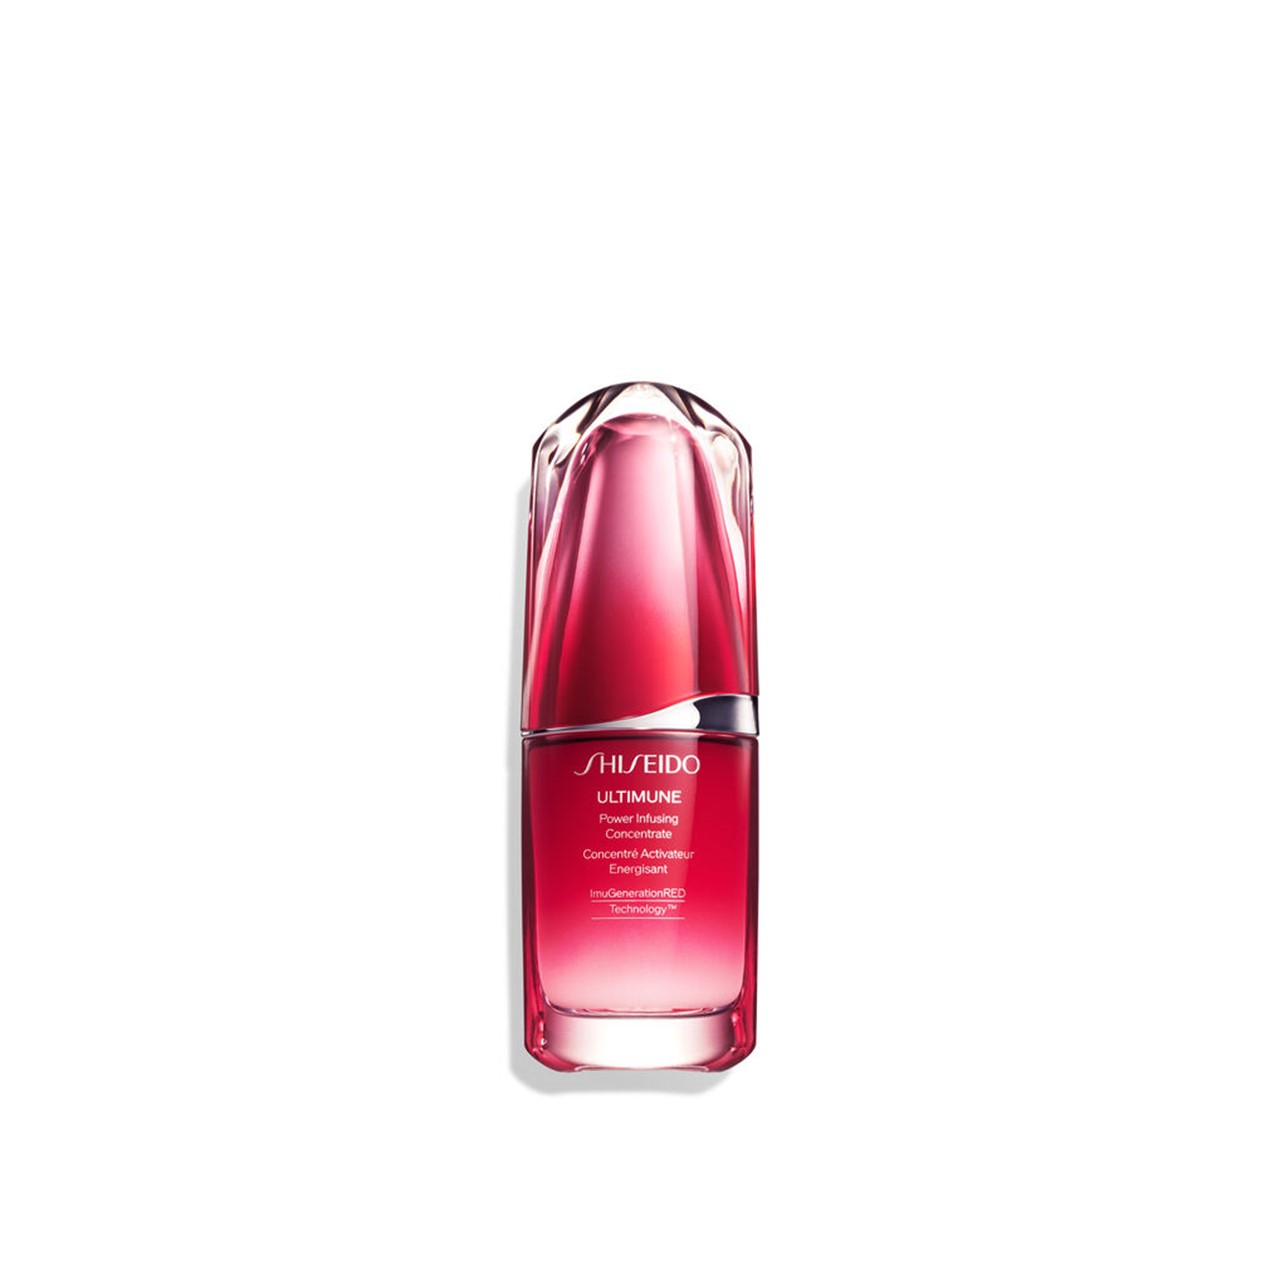 Shiseido Ultimune Power Infusing Concentrate Serum 30ml (1.01fl oz)